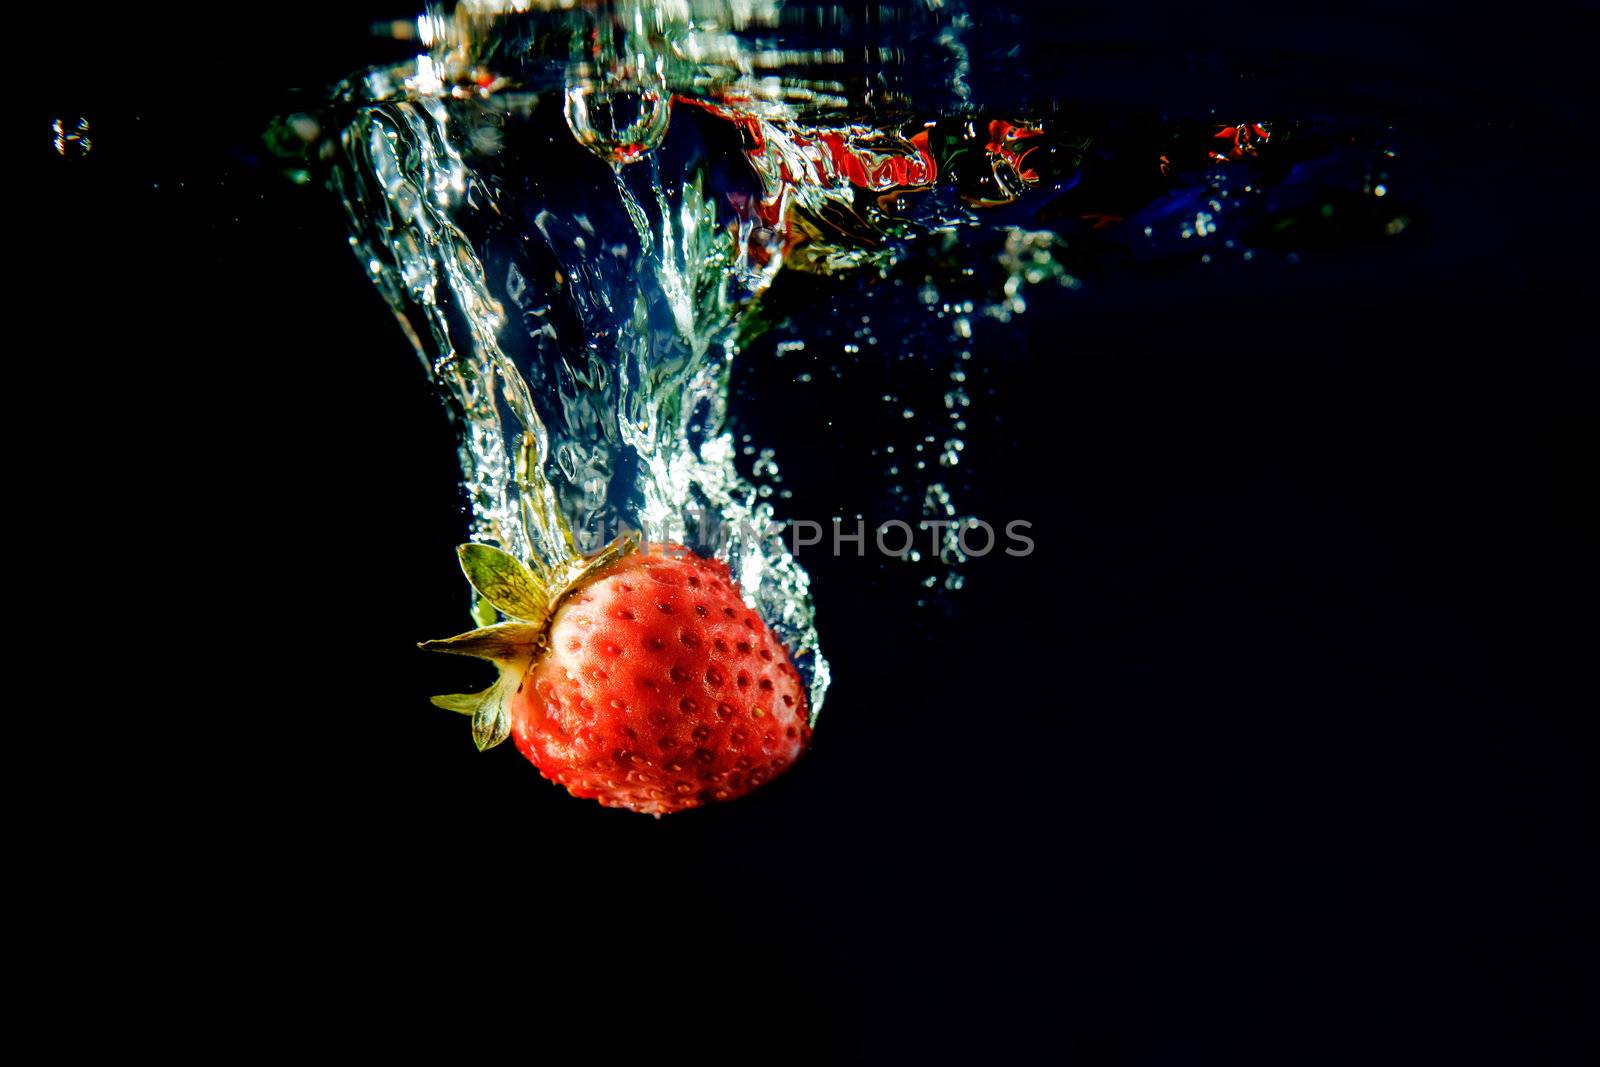 A strawberry splashing in water